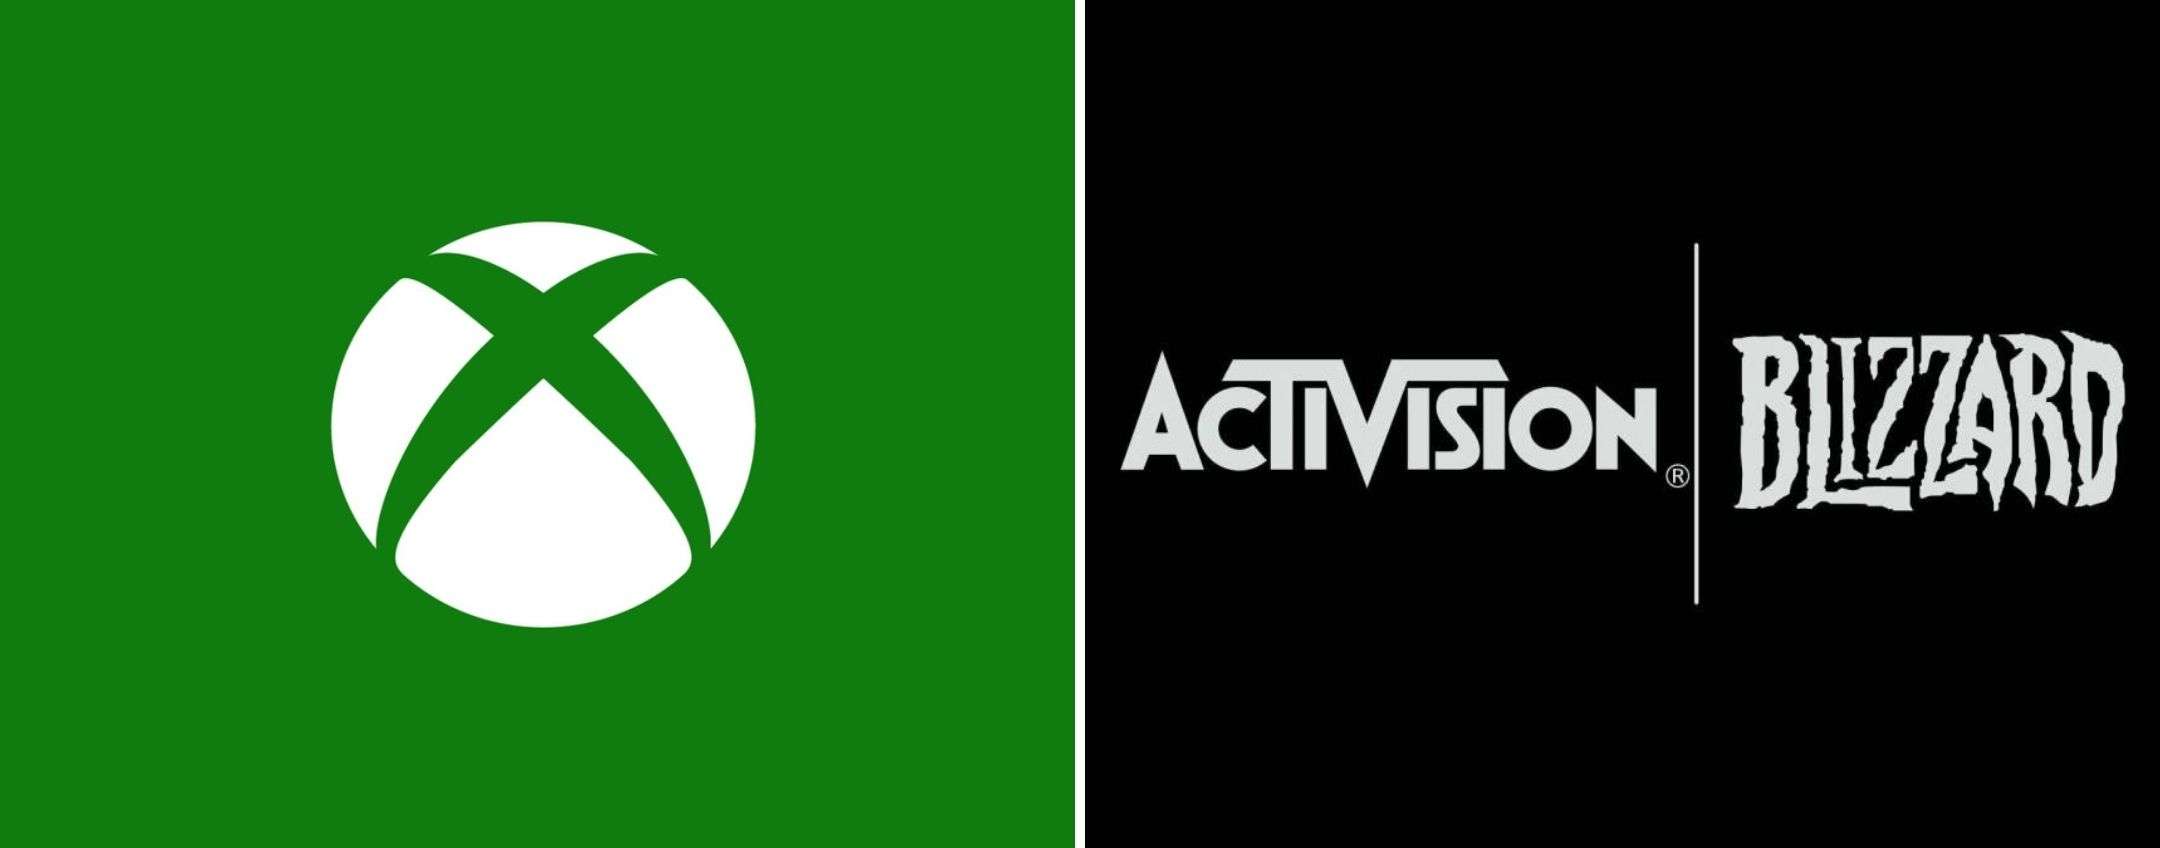 Xbox Activision Metaverso